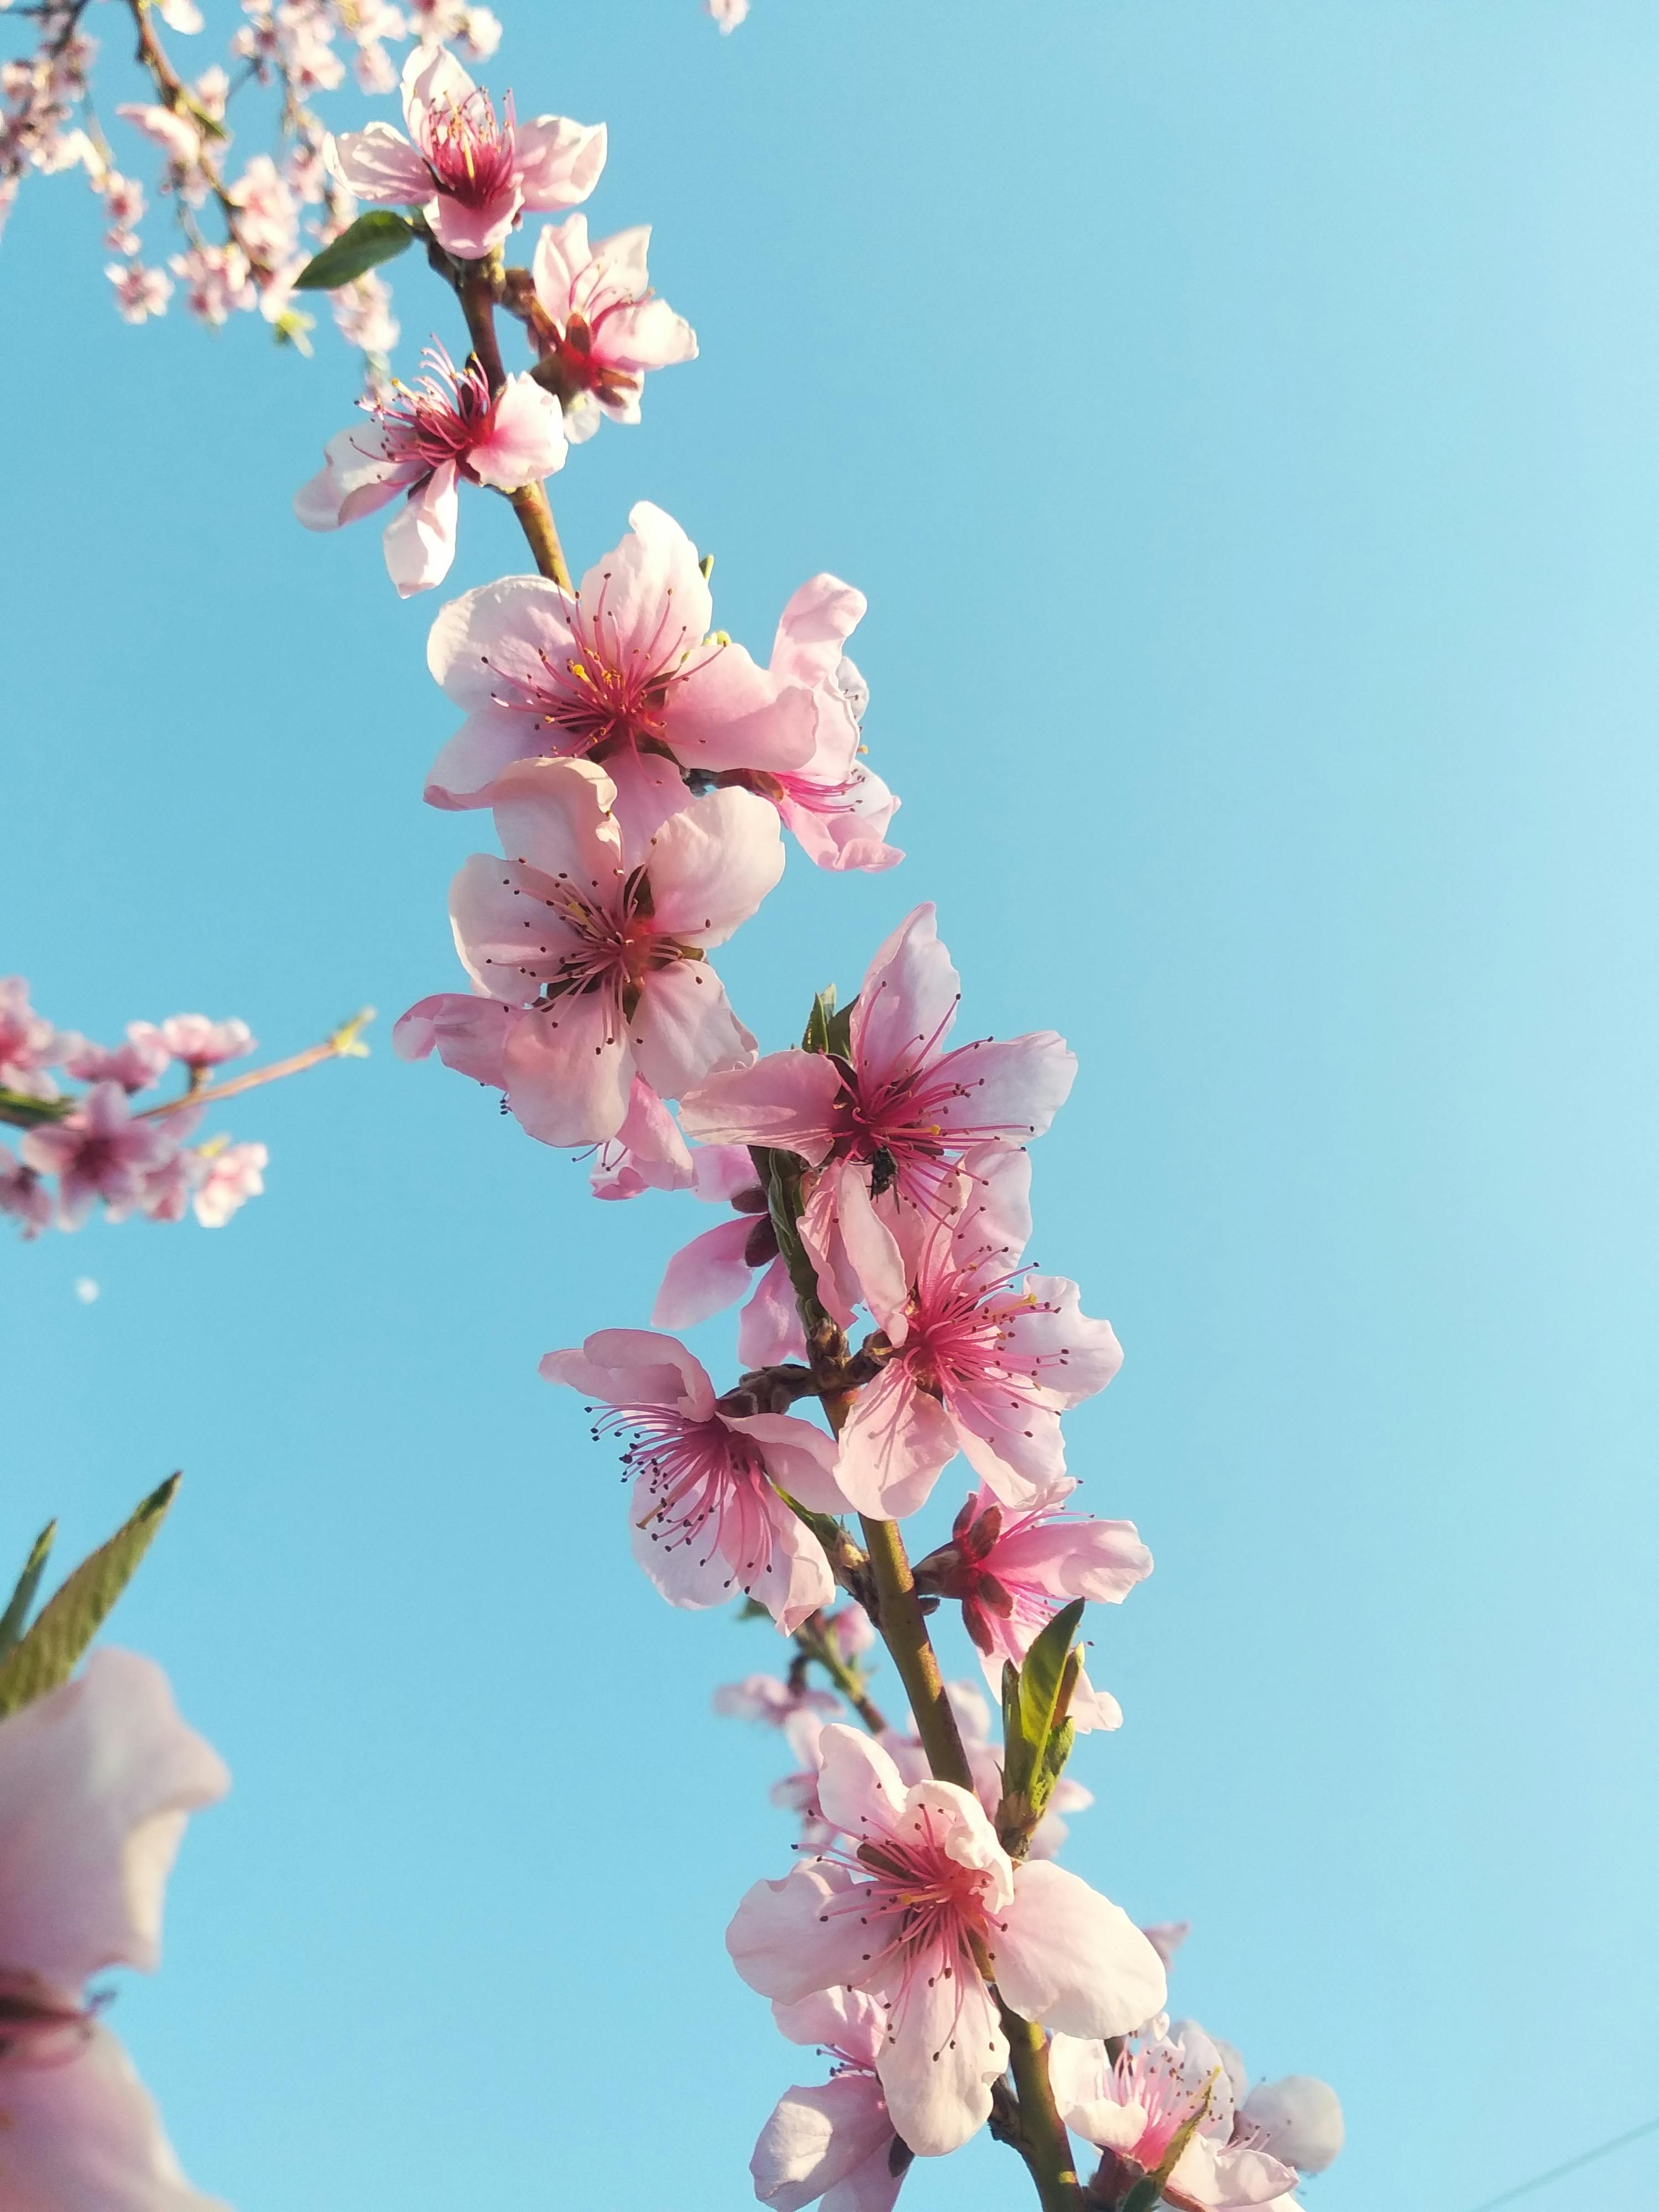 Pink Cherry Blossom Tree Under Blue Sky · Free Stock Photo